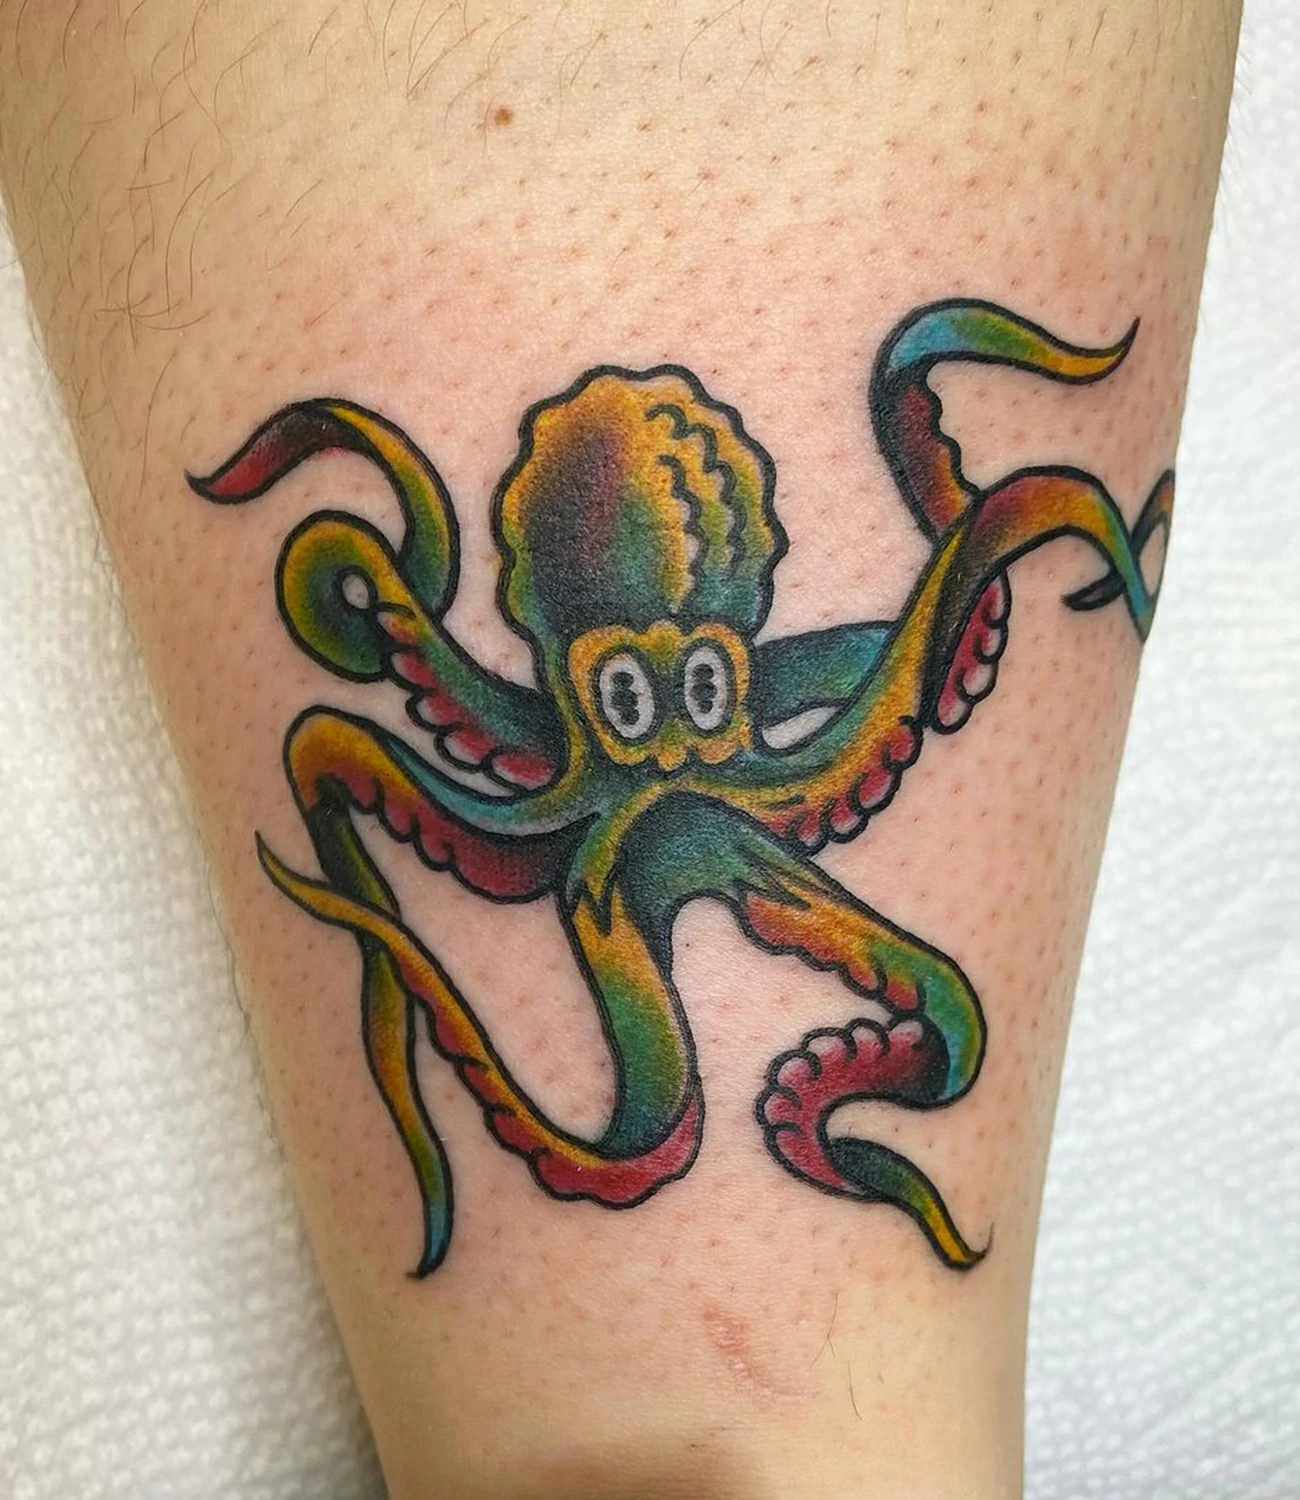 Sailor Jerry Octopus Tattoo